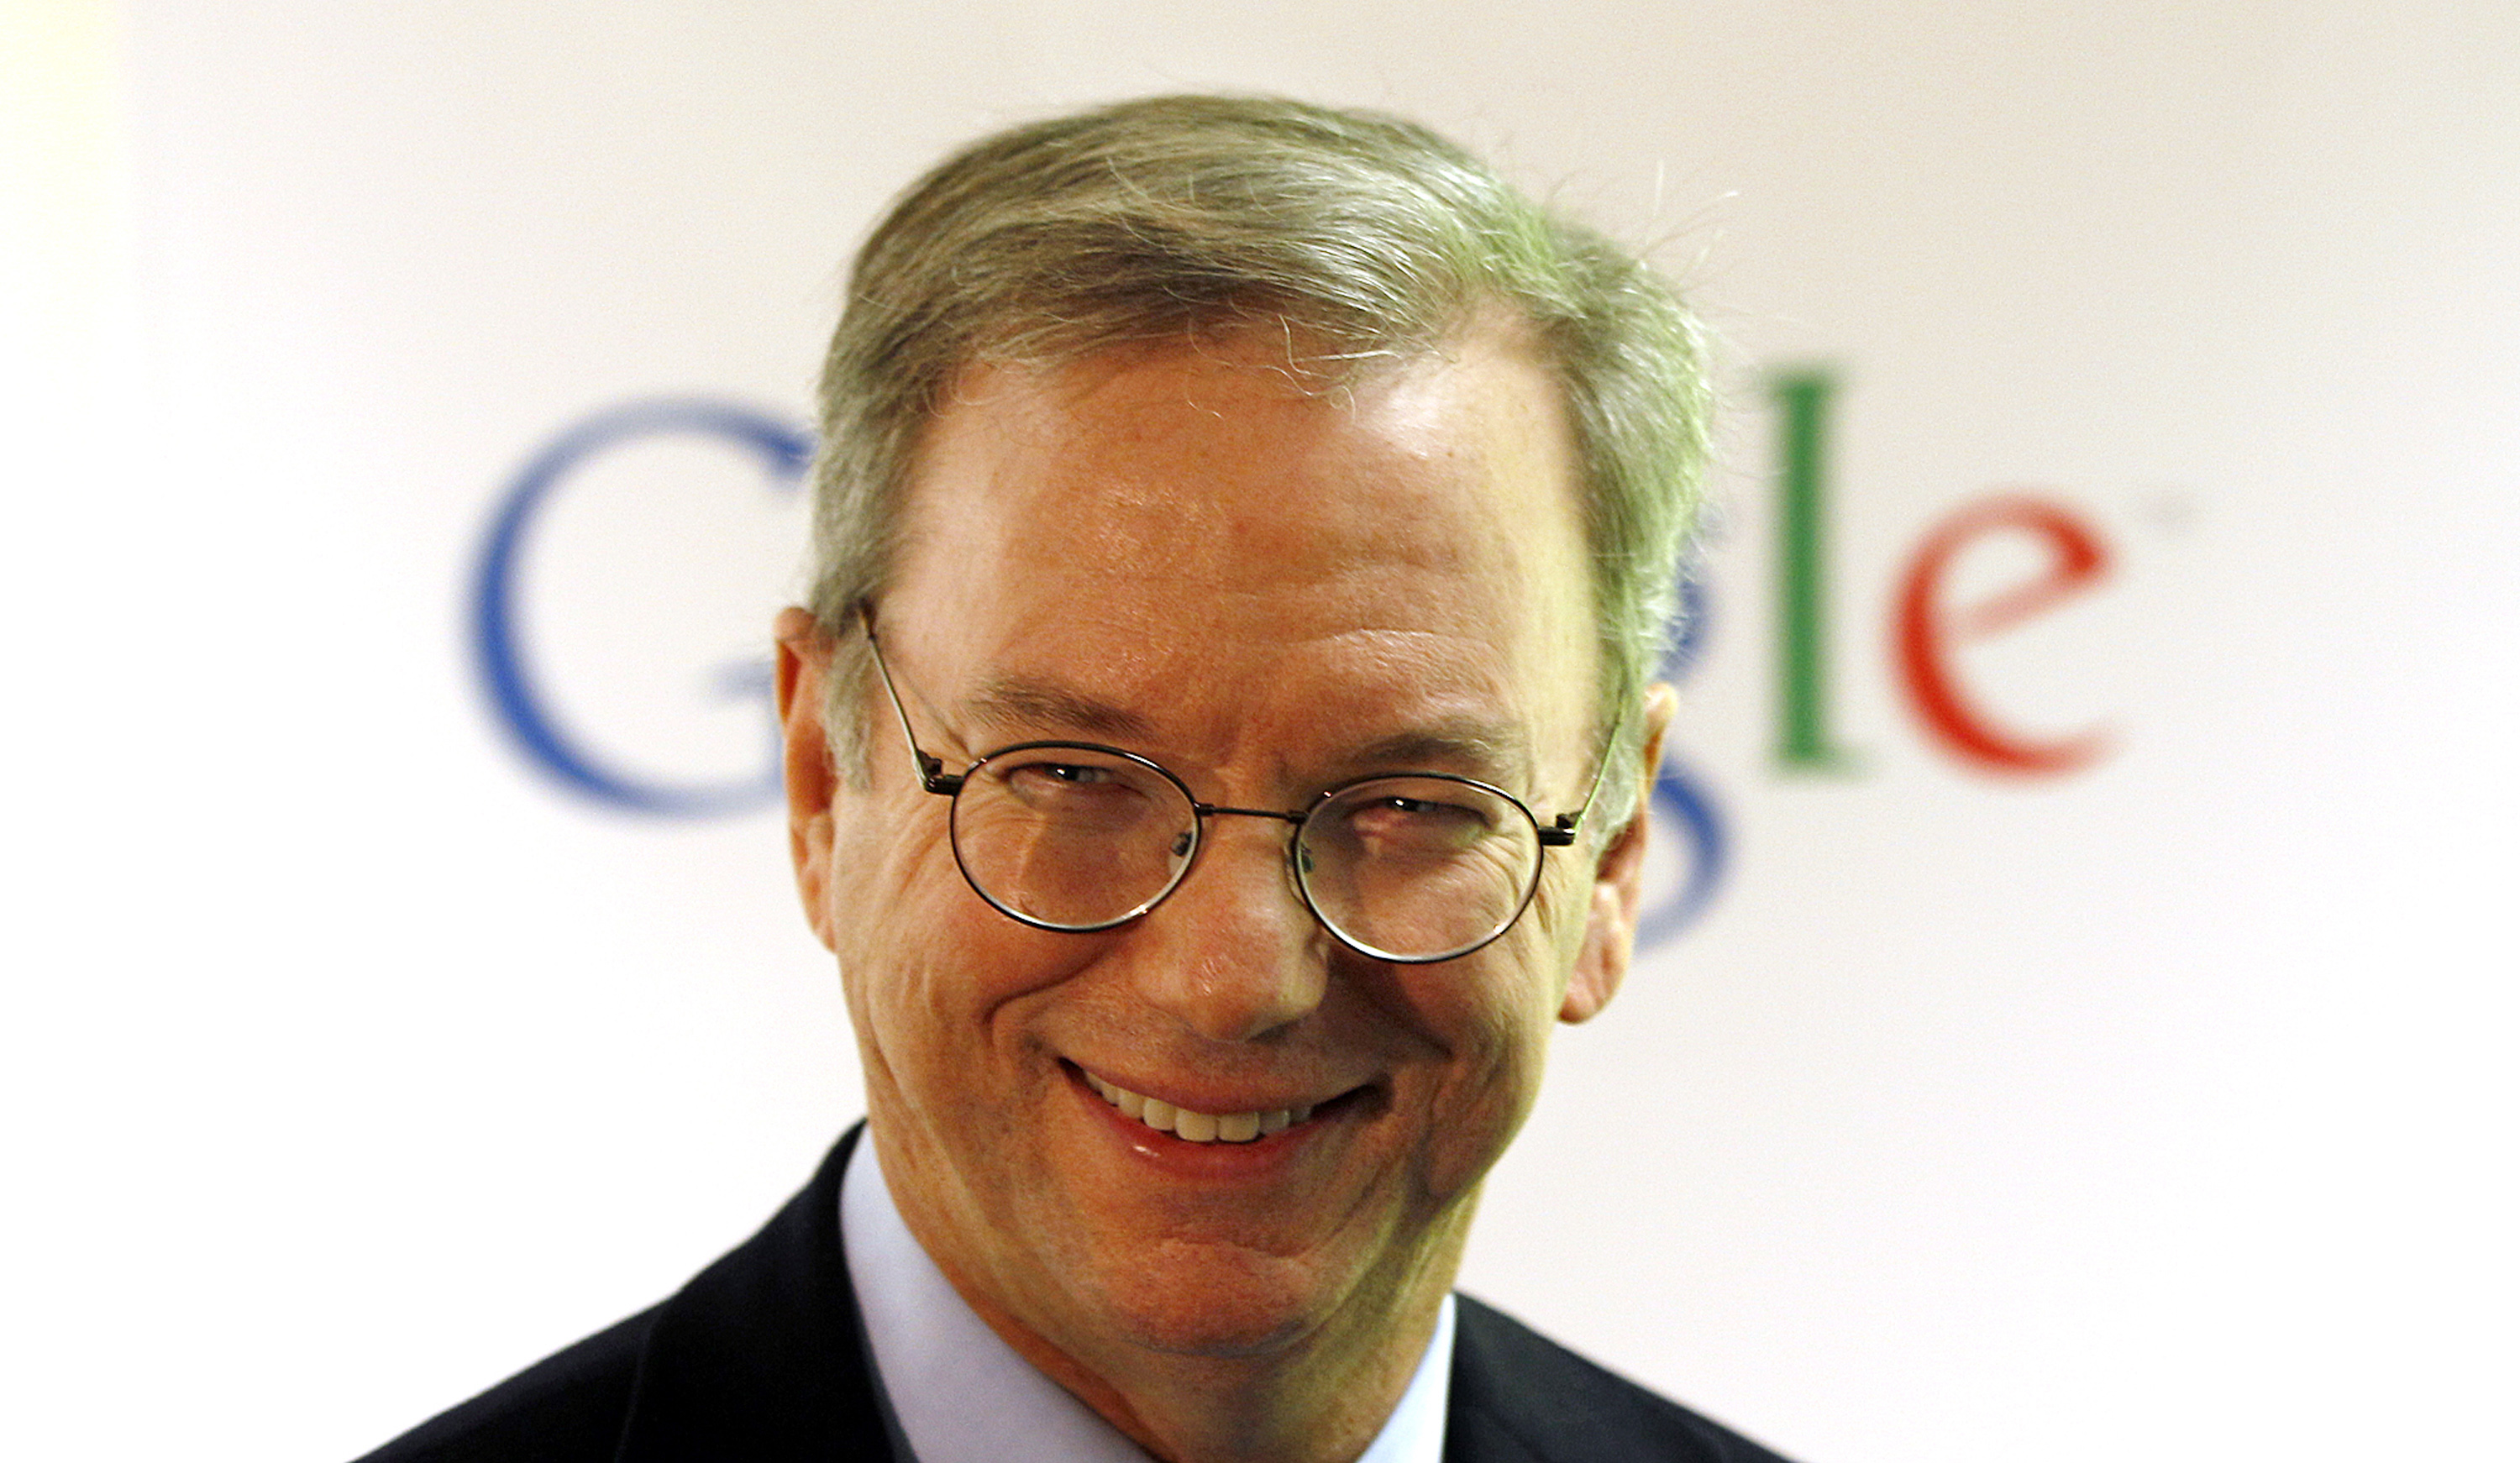 Eric Schmidt var ekonomisk rådgivare åt president Barack Obama samtidigt som han var verkställande chef på Google.